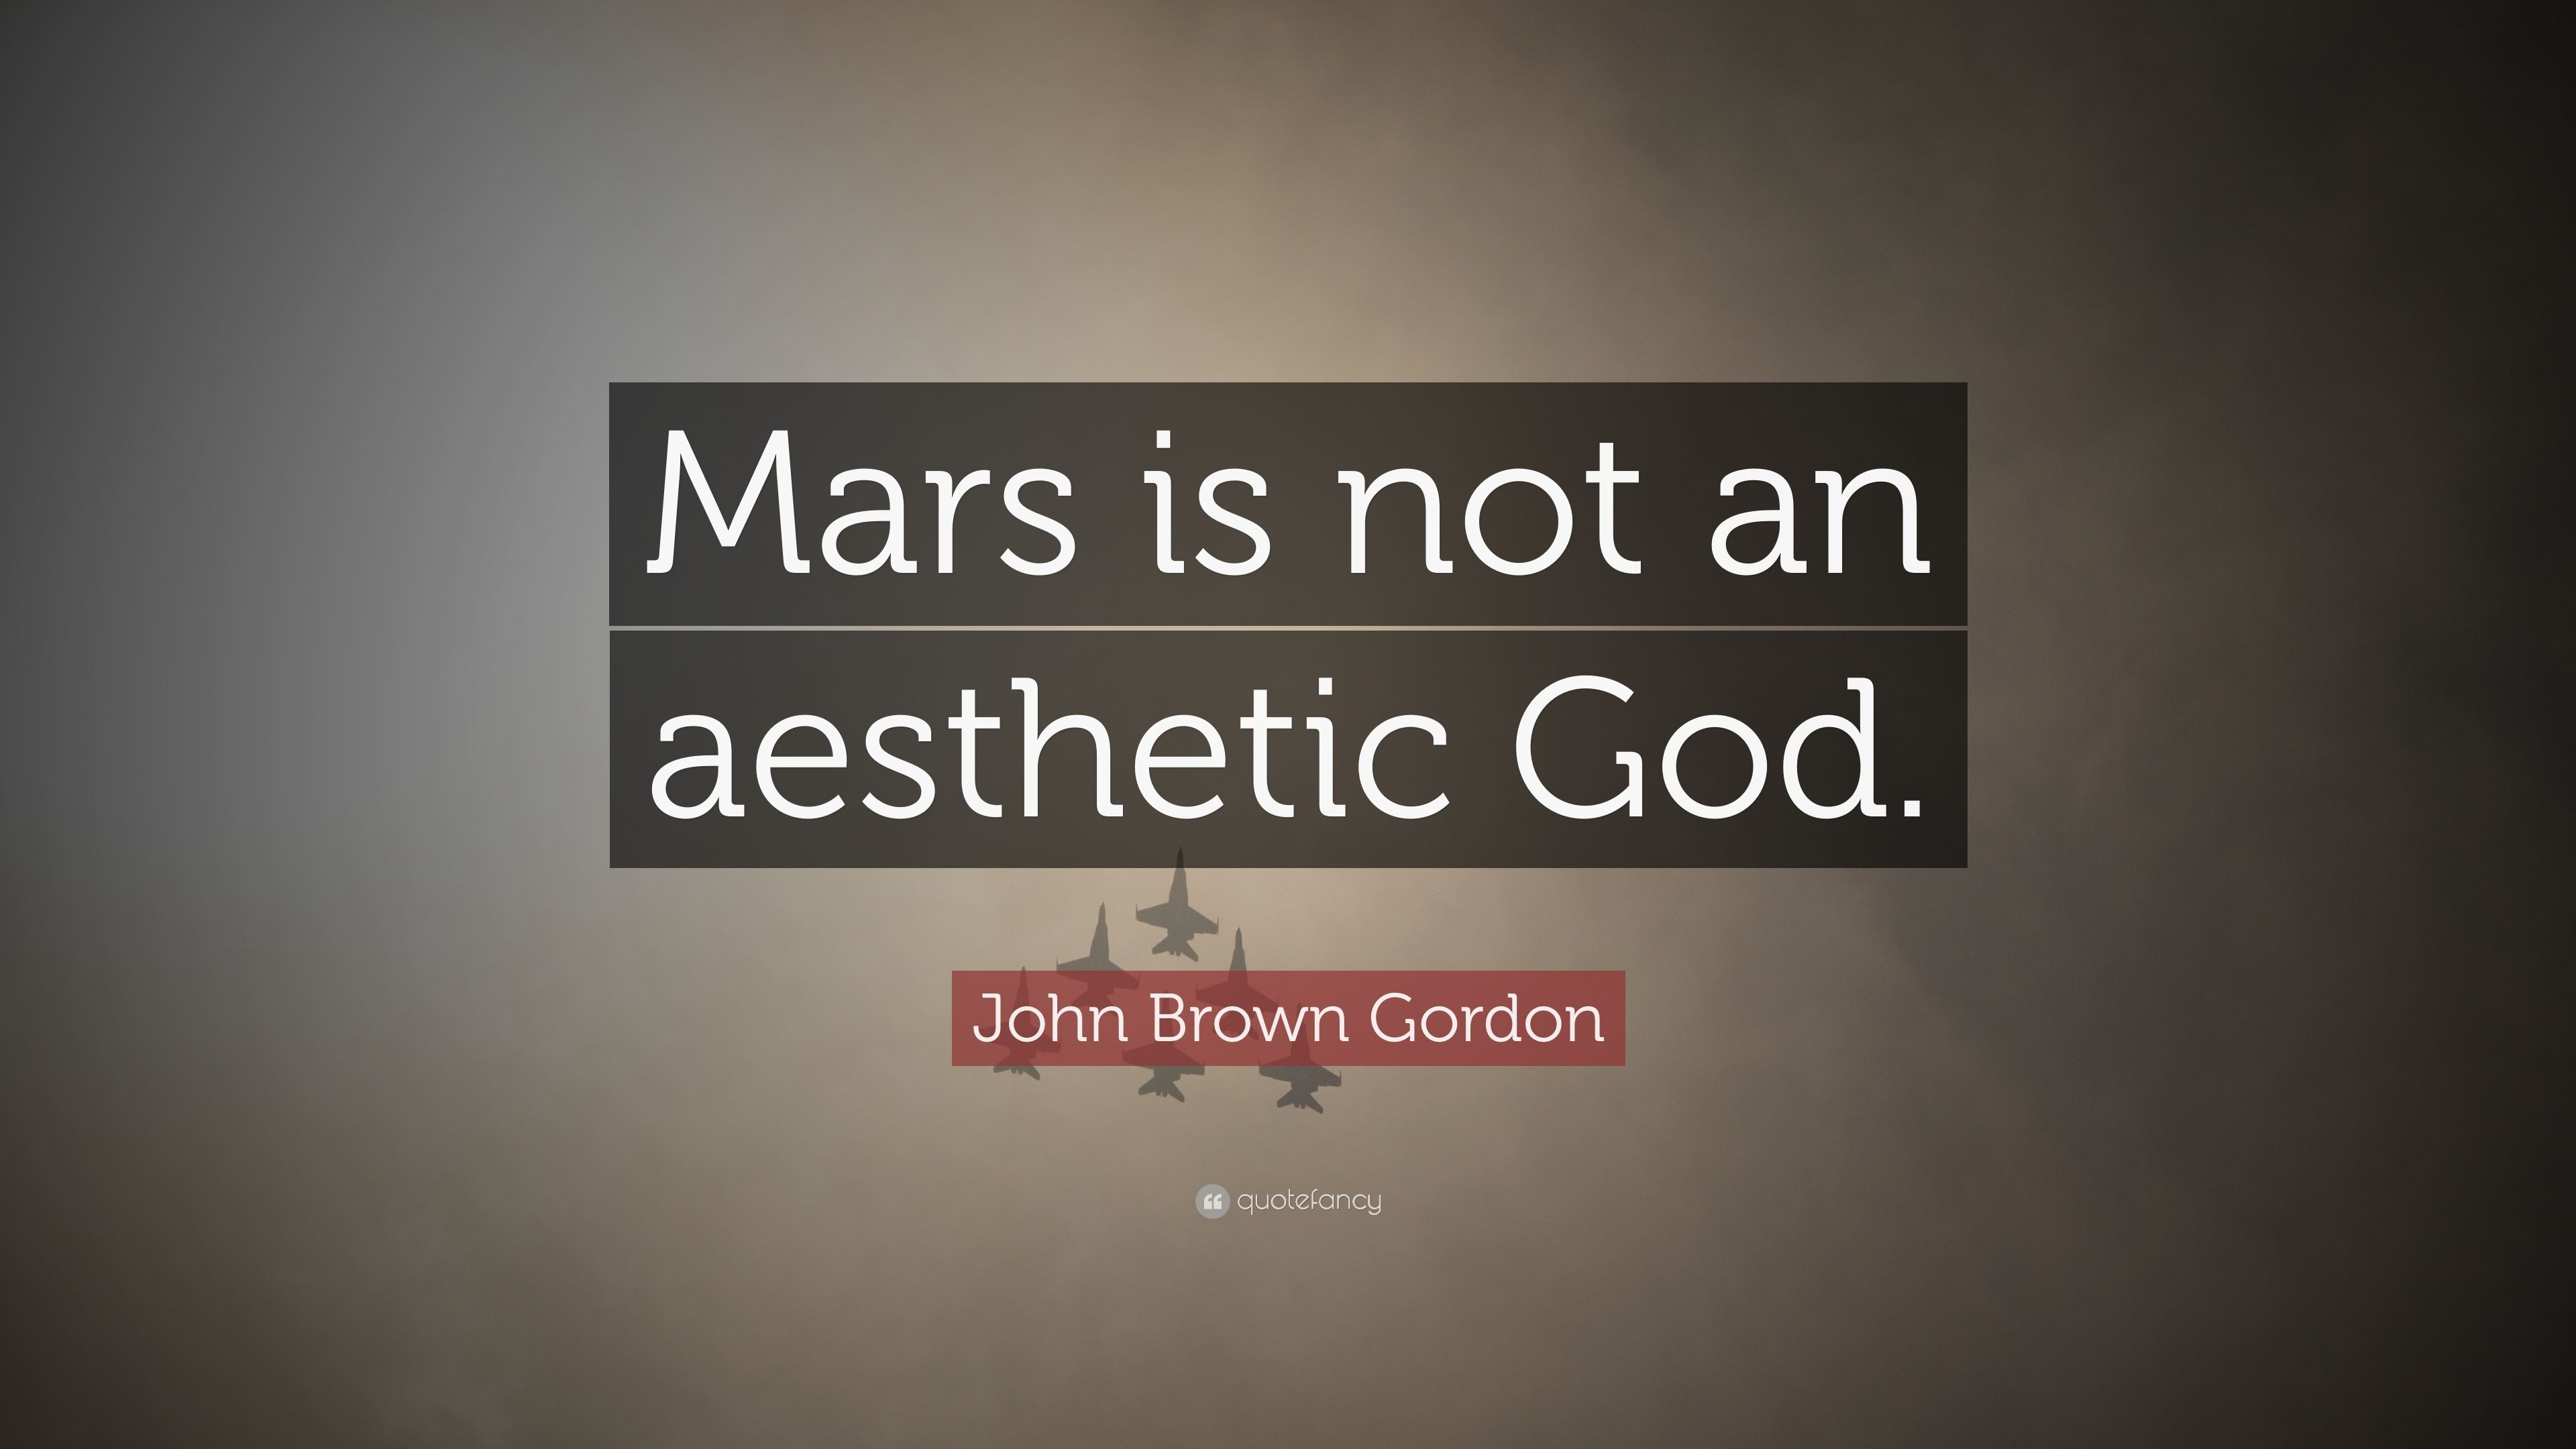 John Brown Gordon Quote: “Mars is not an aesthetic God.” 7